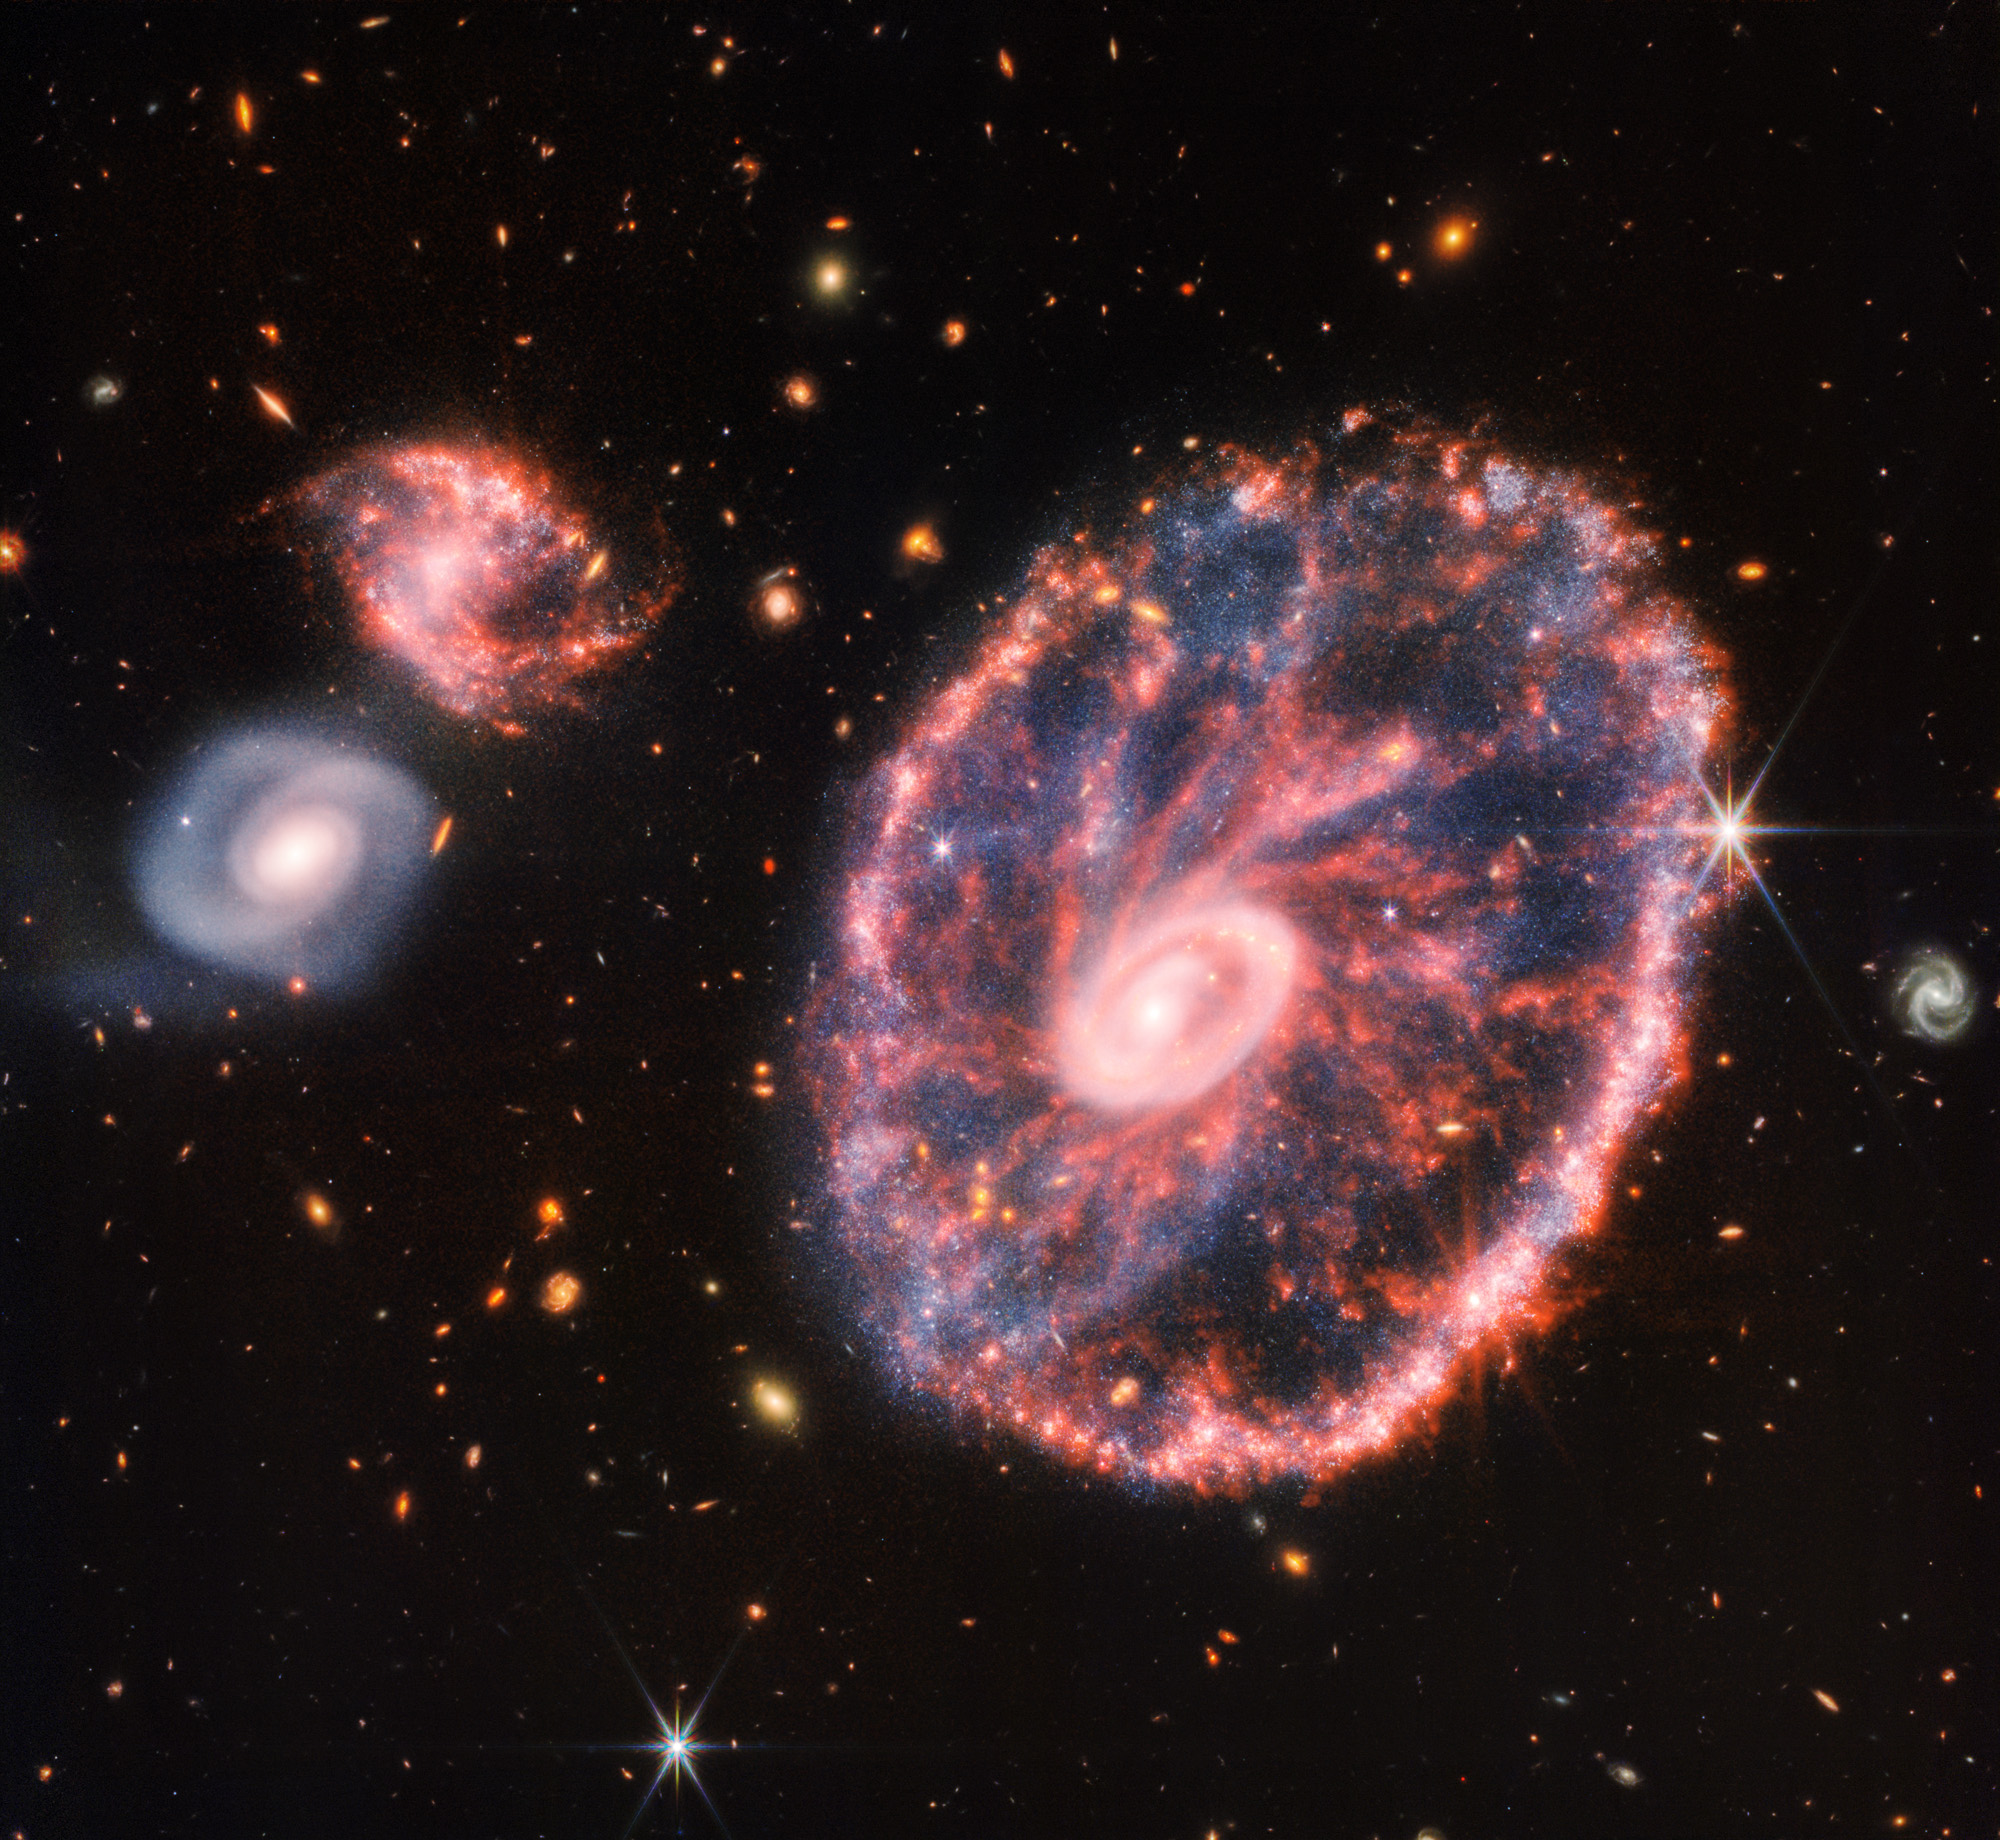 Cartwheel galaxy captured by Webb image